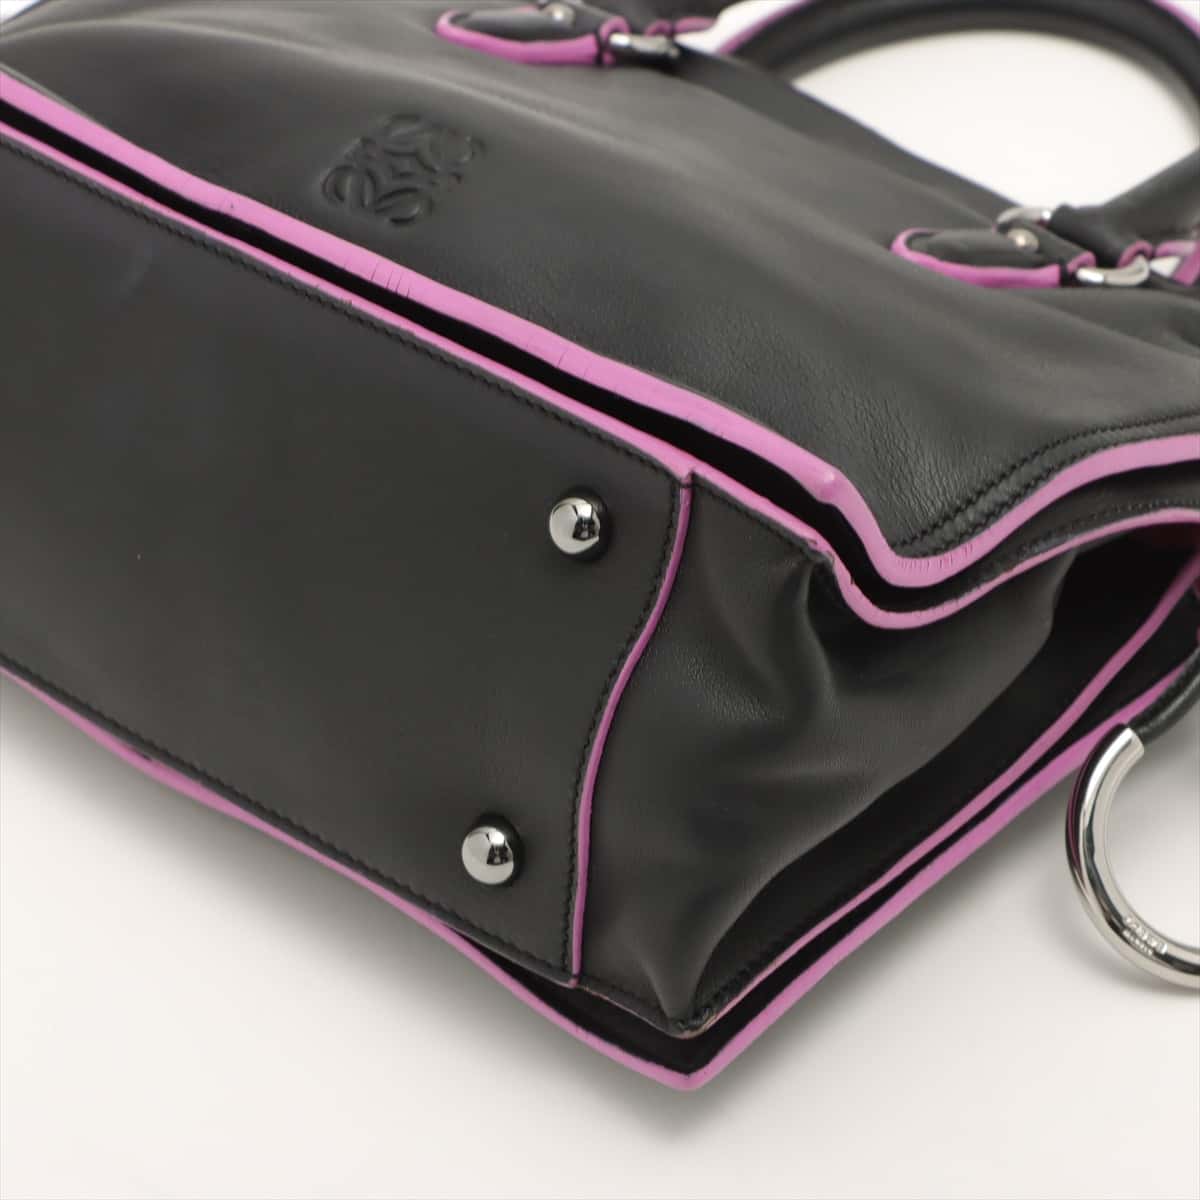 Loewe Flamenco Nappa leather 2way handbag Black